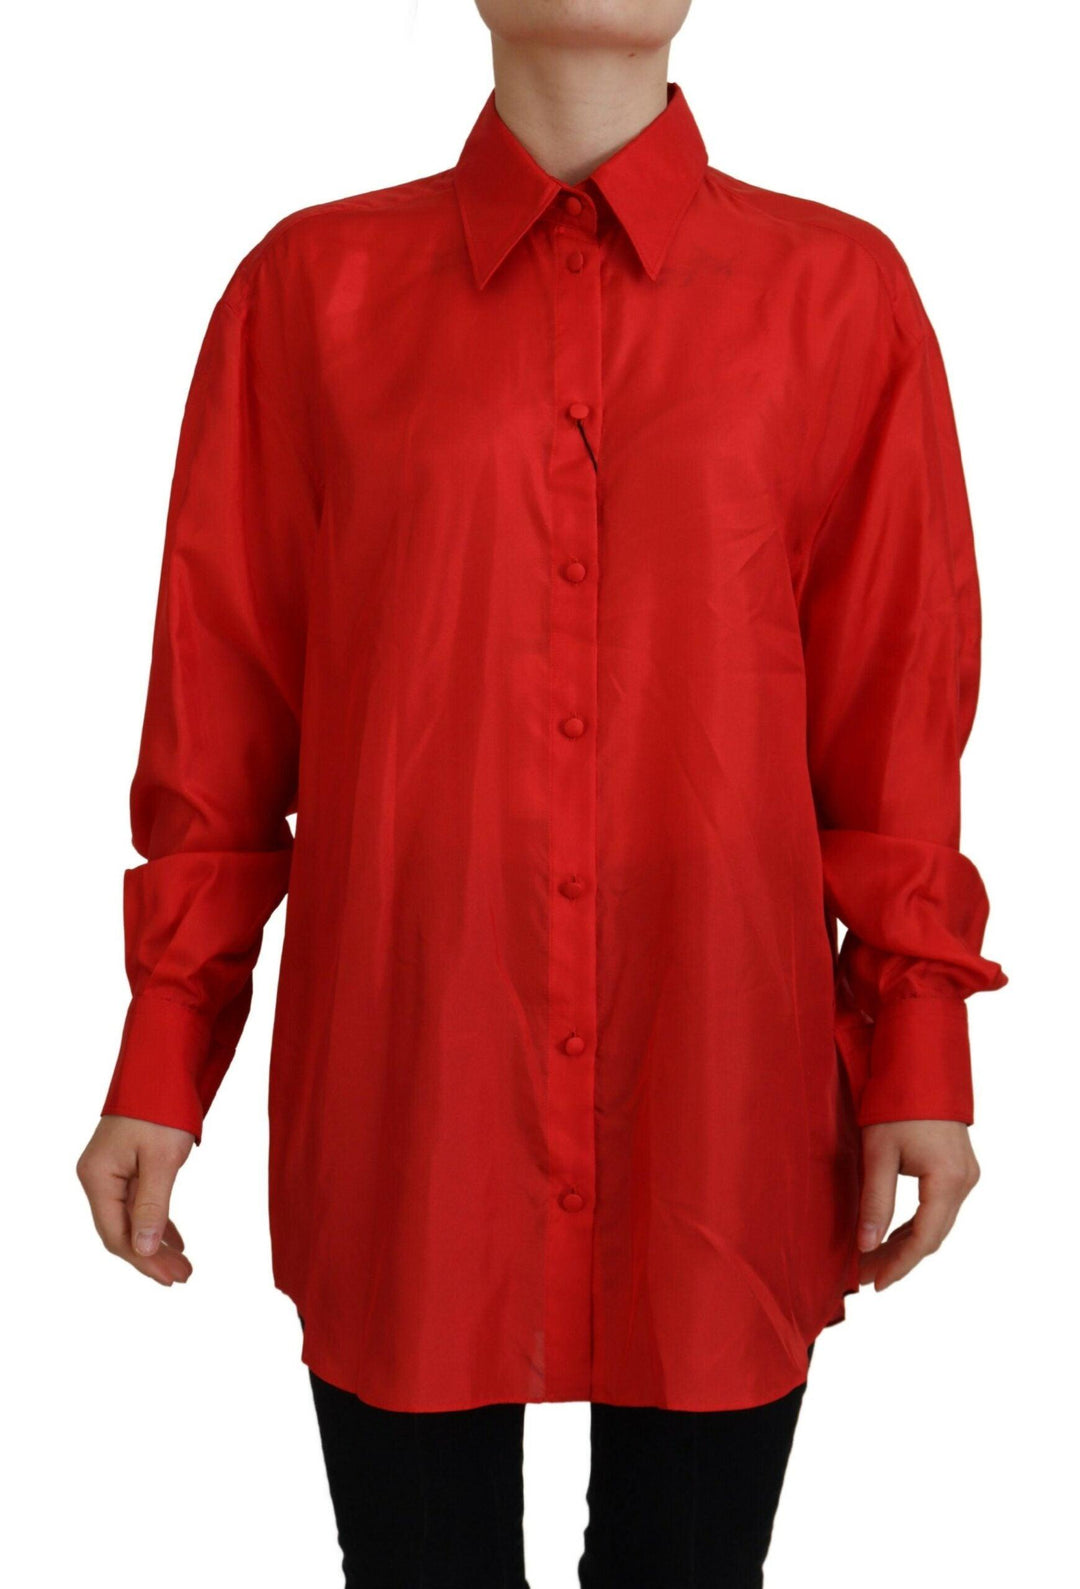 Dolce & Gabbana Red Silk Collared Long Sleeves Dress Shirt Top - Ellie Belle